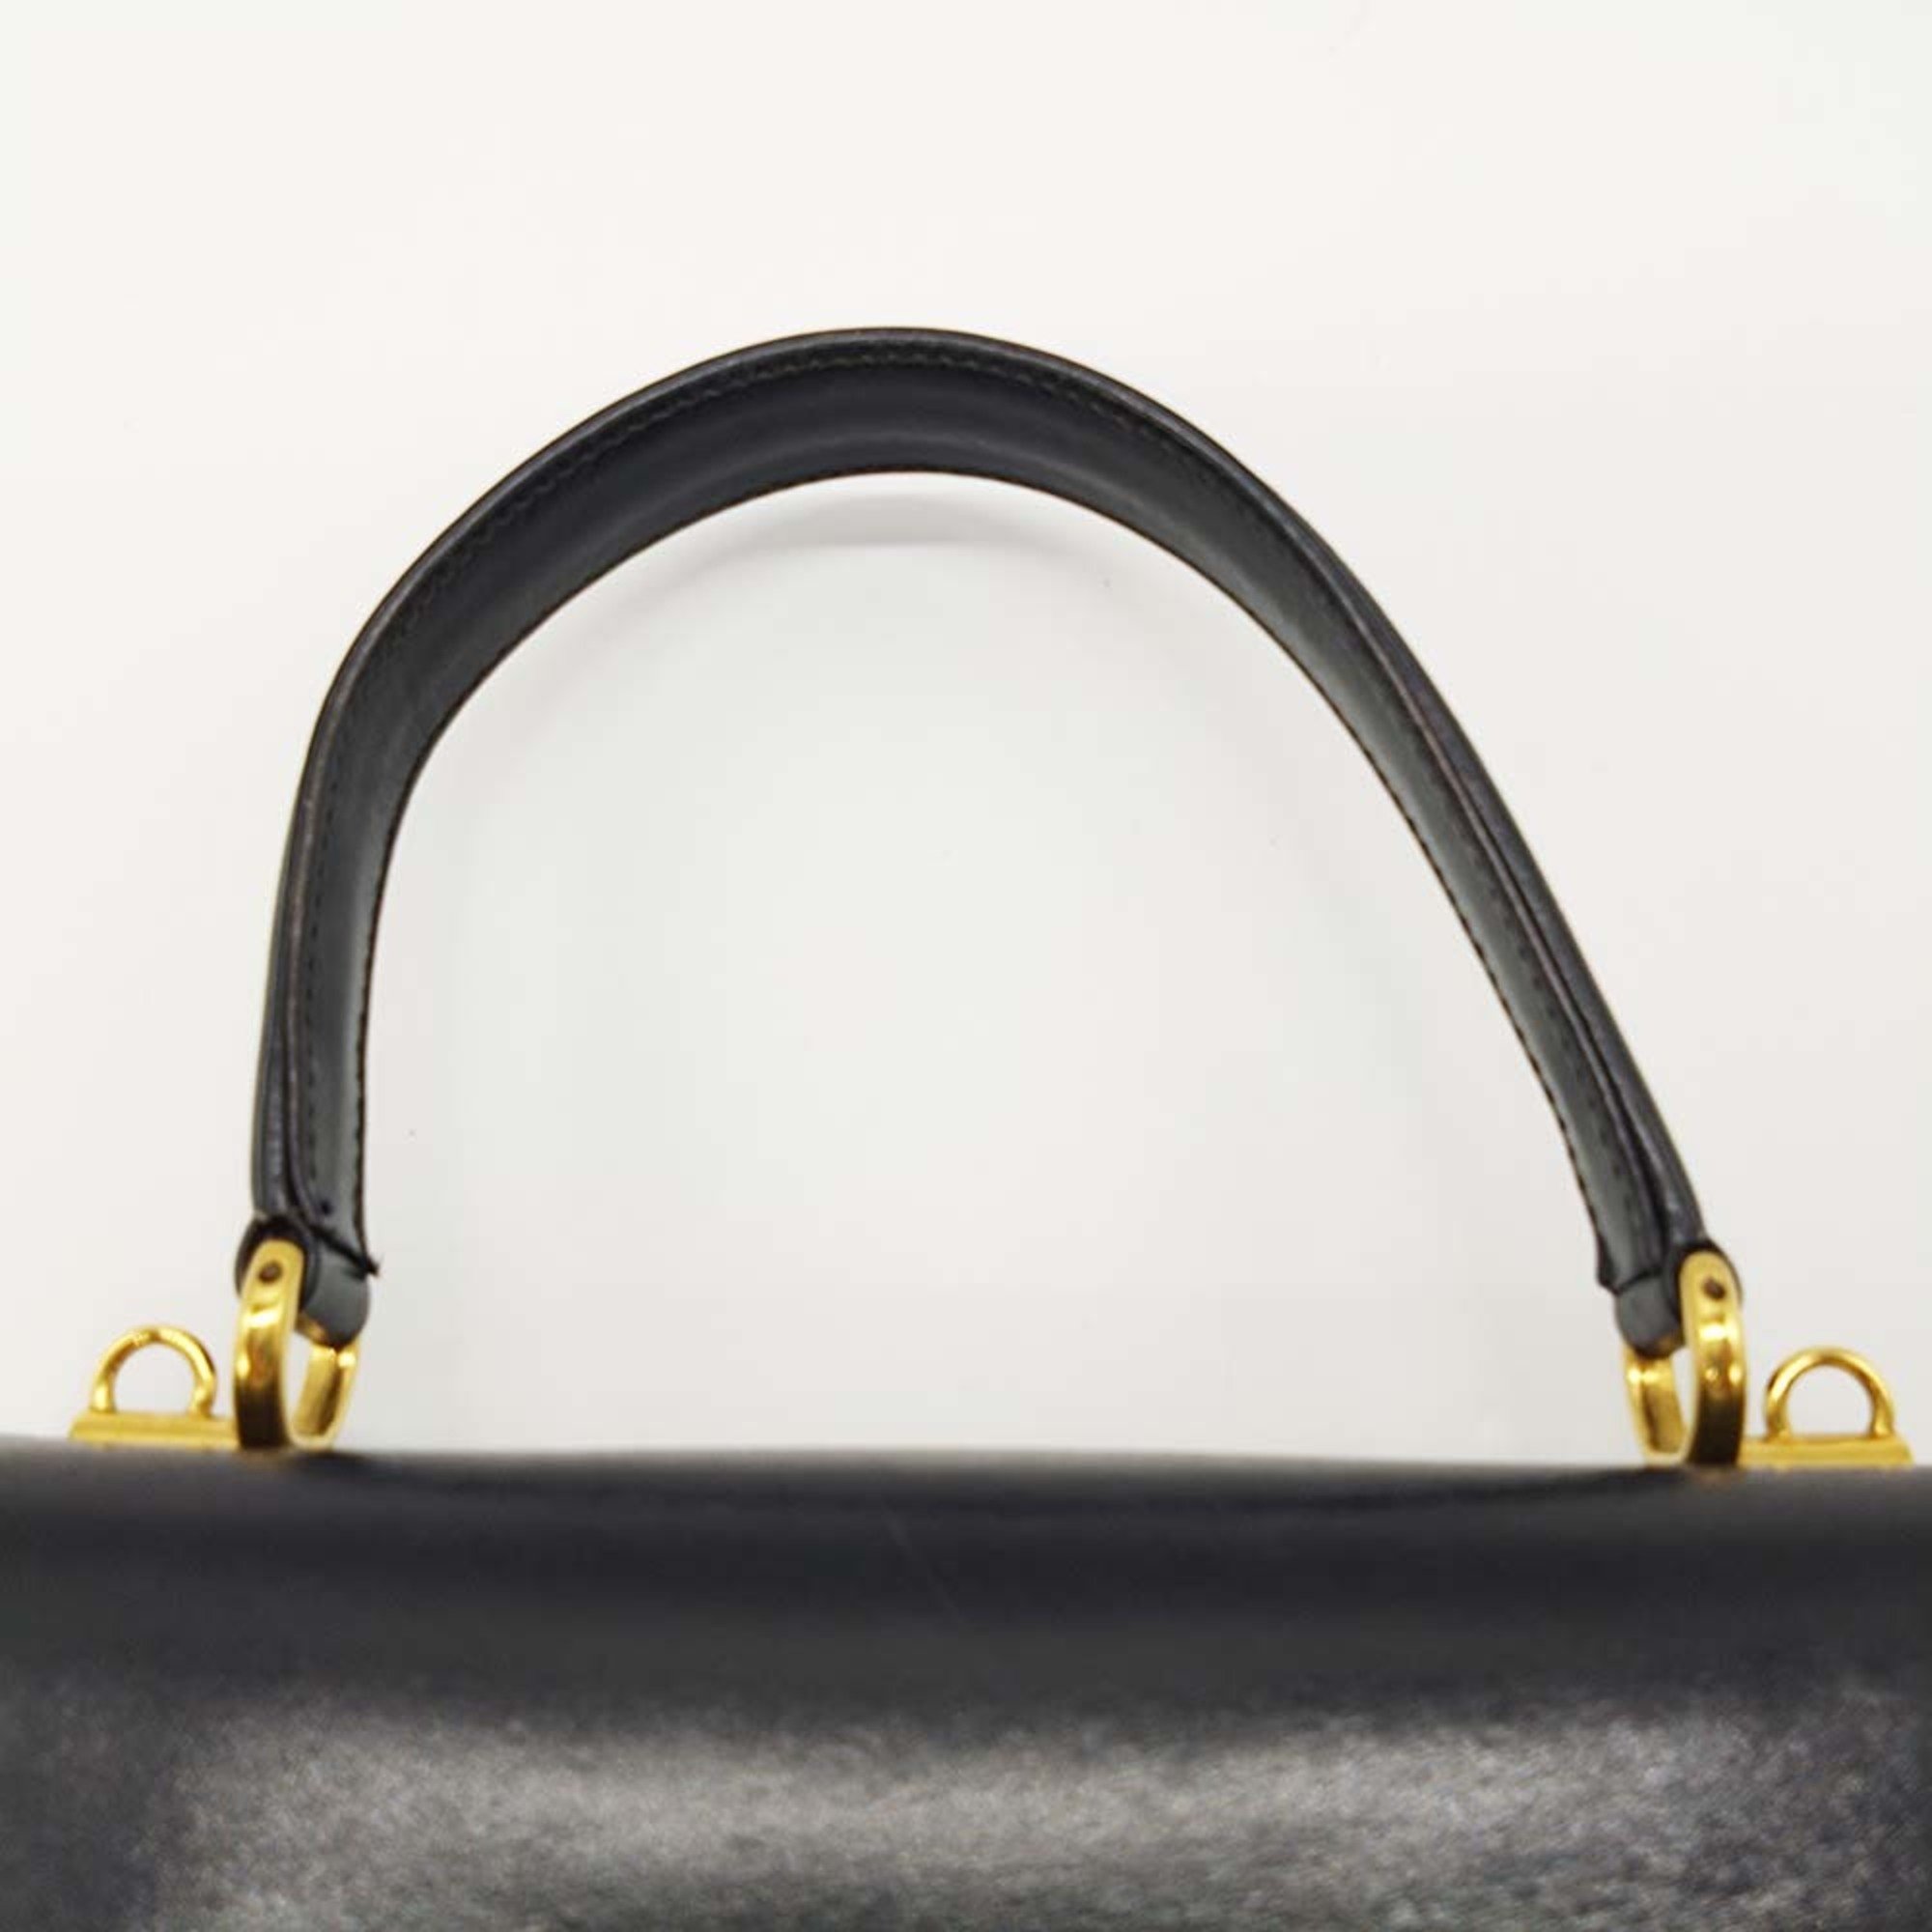 GUCCI 000 406 0264 Old Gucci Handbag Black Leather Women's Fashion